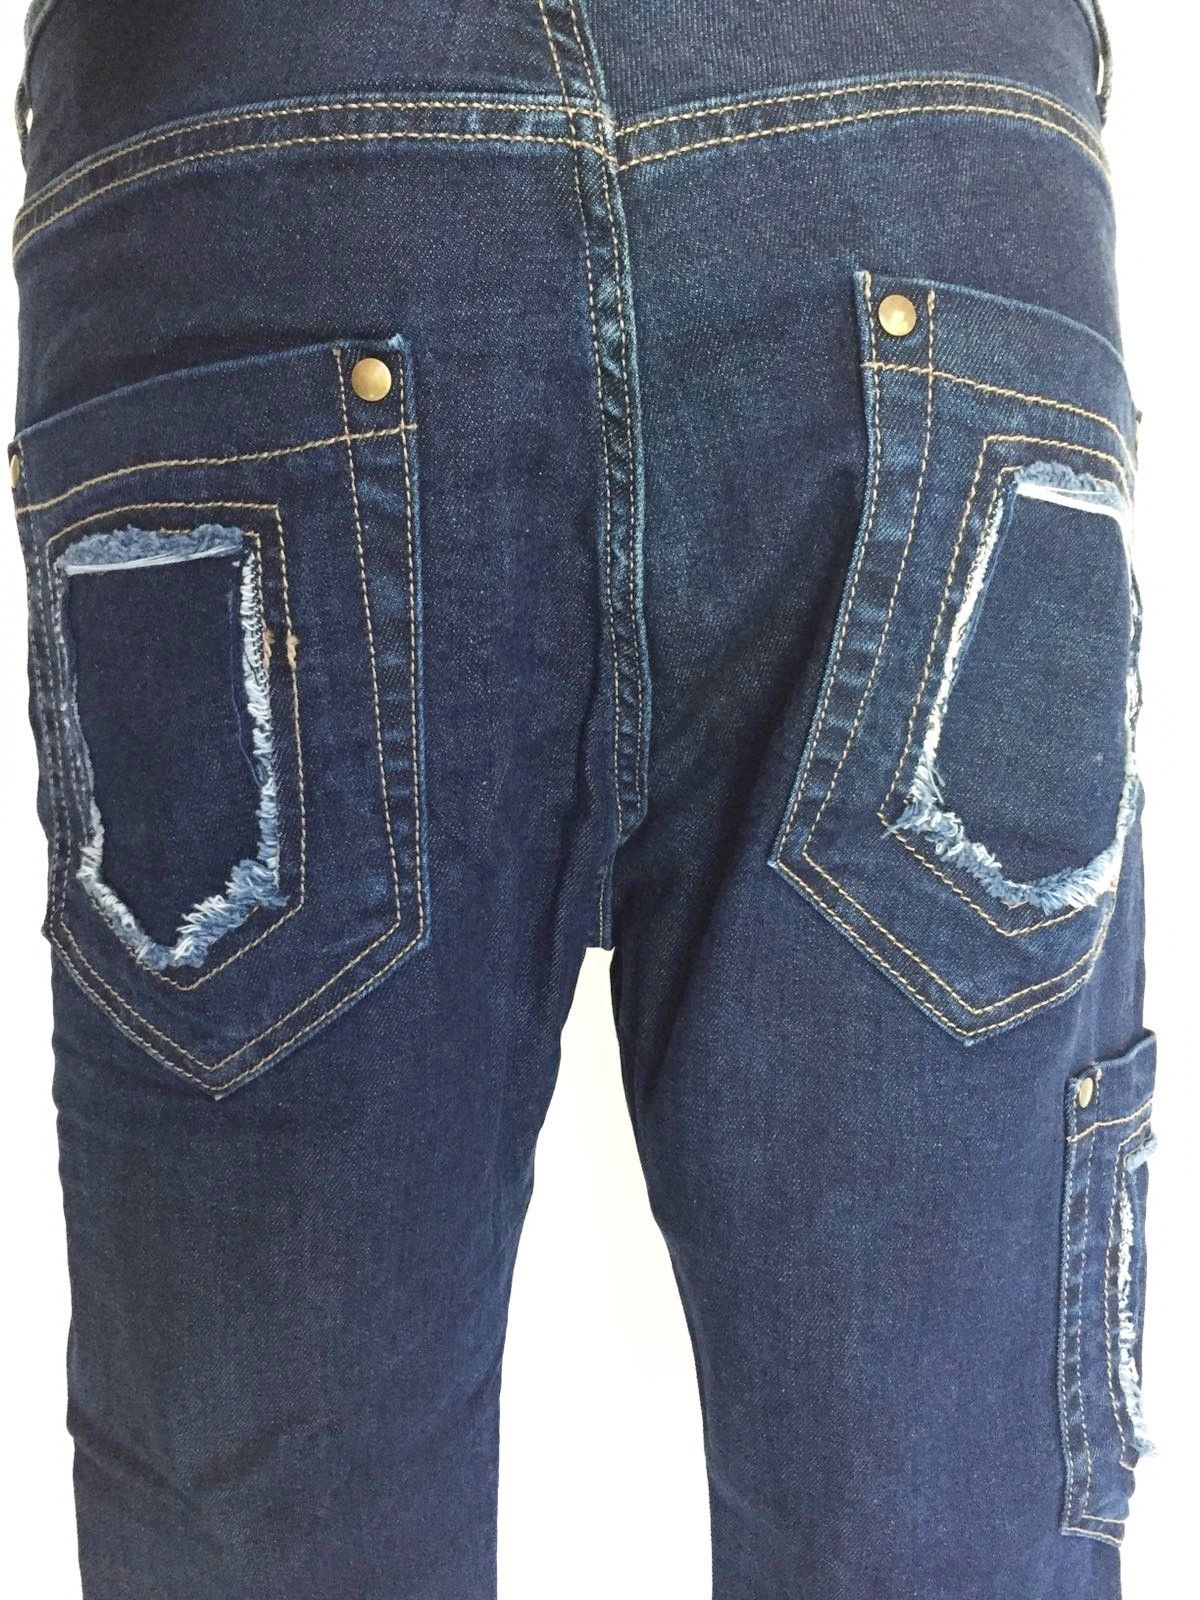 Jeans Sexy Woman mod.Boyfriend tasca laterale Cod.P414900